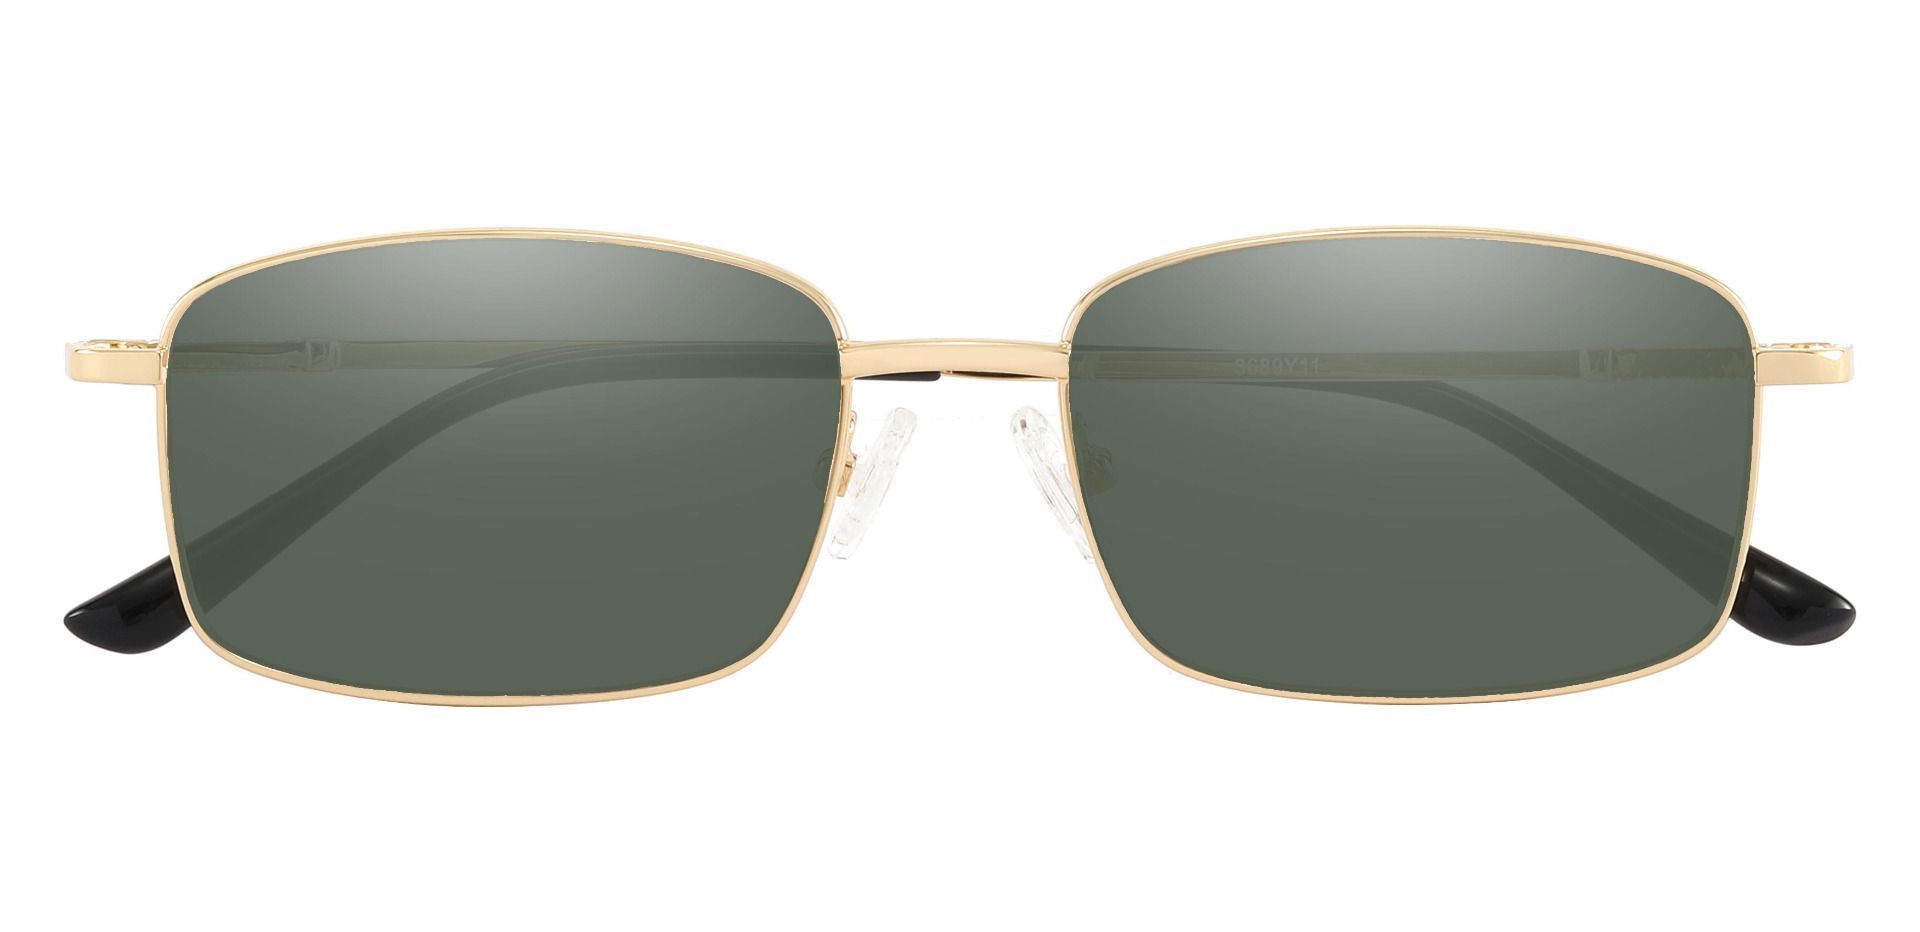 Clyde Rectangle Progressive Sunglasses - Gold Frame With Green Lenses